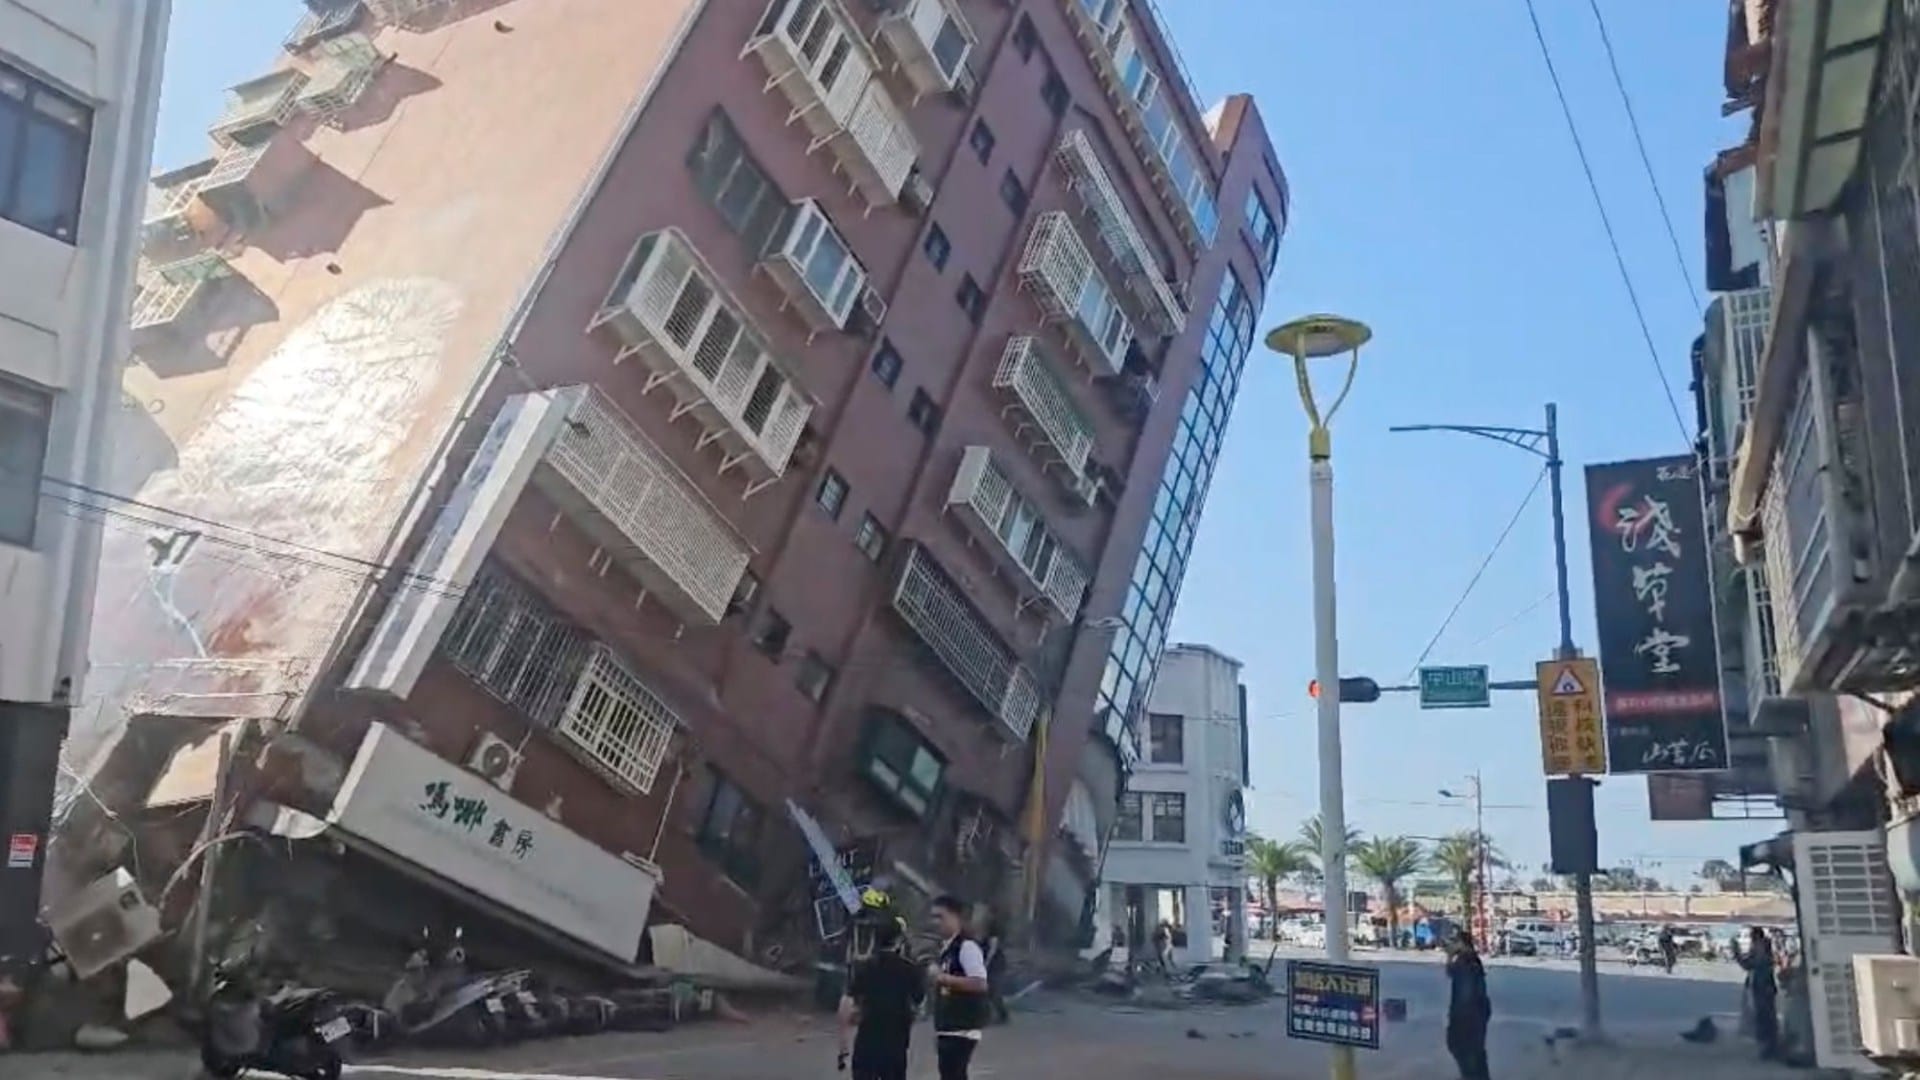 Earthquake hits Taiwan: At least 9 killed & 821 hurt as huge 7.7 magnitude quake downs buildings & triggers landslides